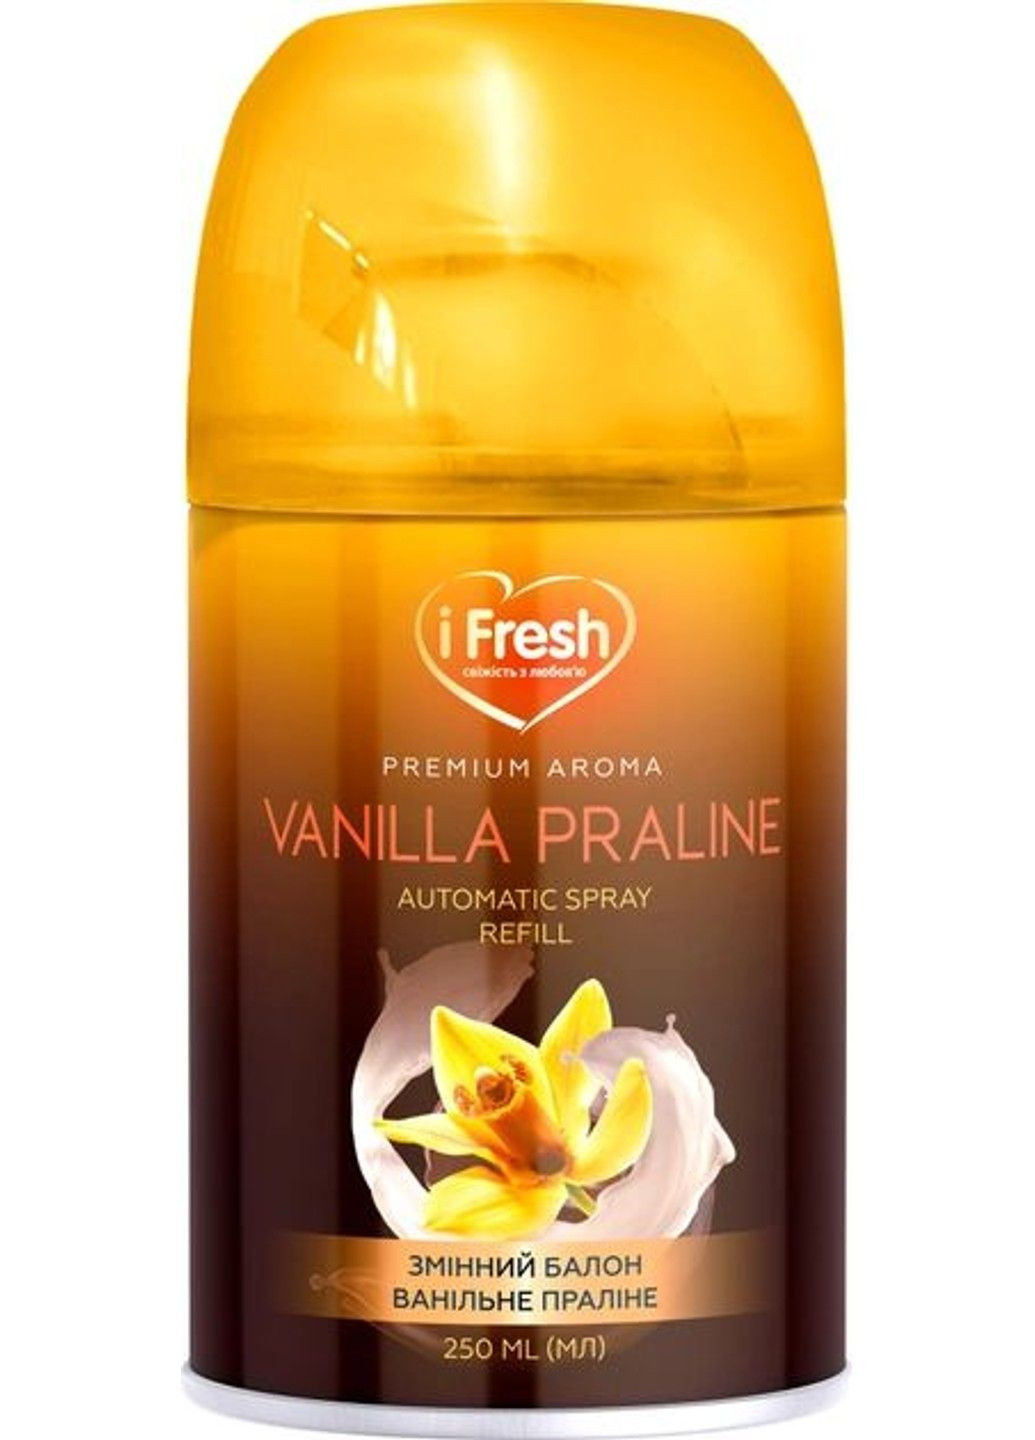 Сменный аэрозольный баллон Premium aroma vanilla praline 250 мл iFresh (280898441)